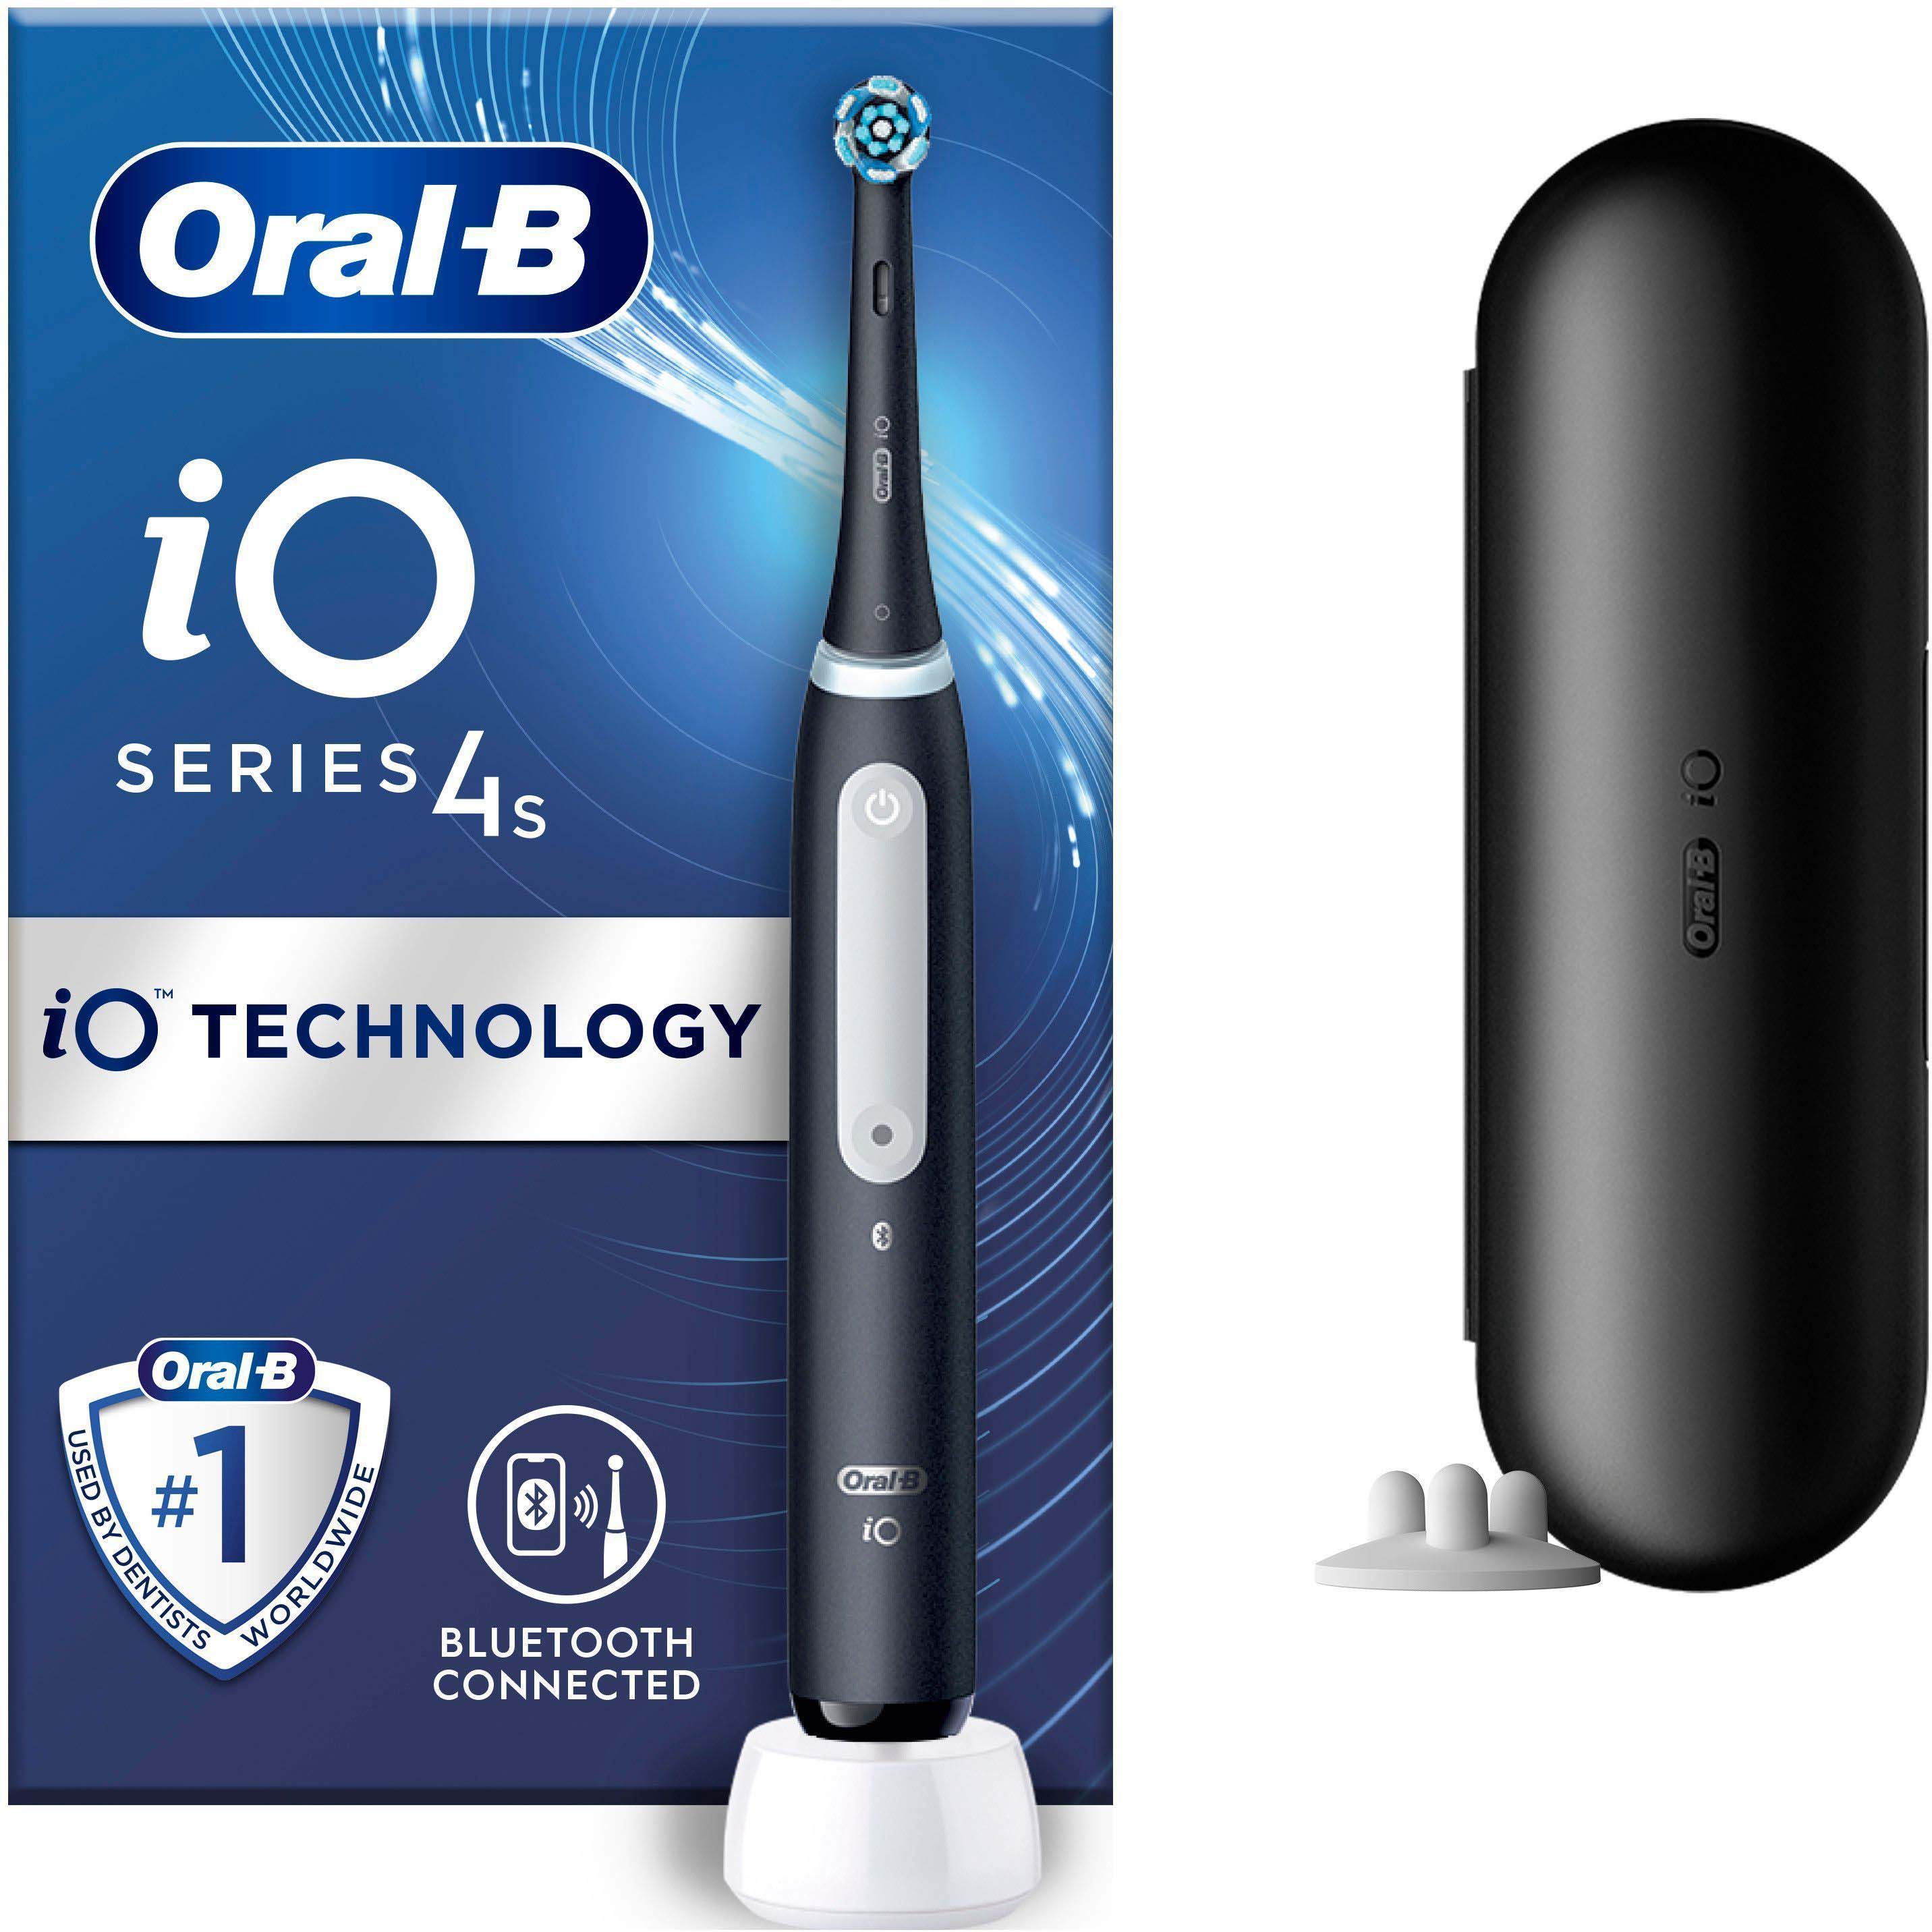 Oral B iO 4S black electric toothbrush designed by Braun | lyko.com